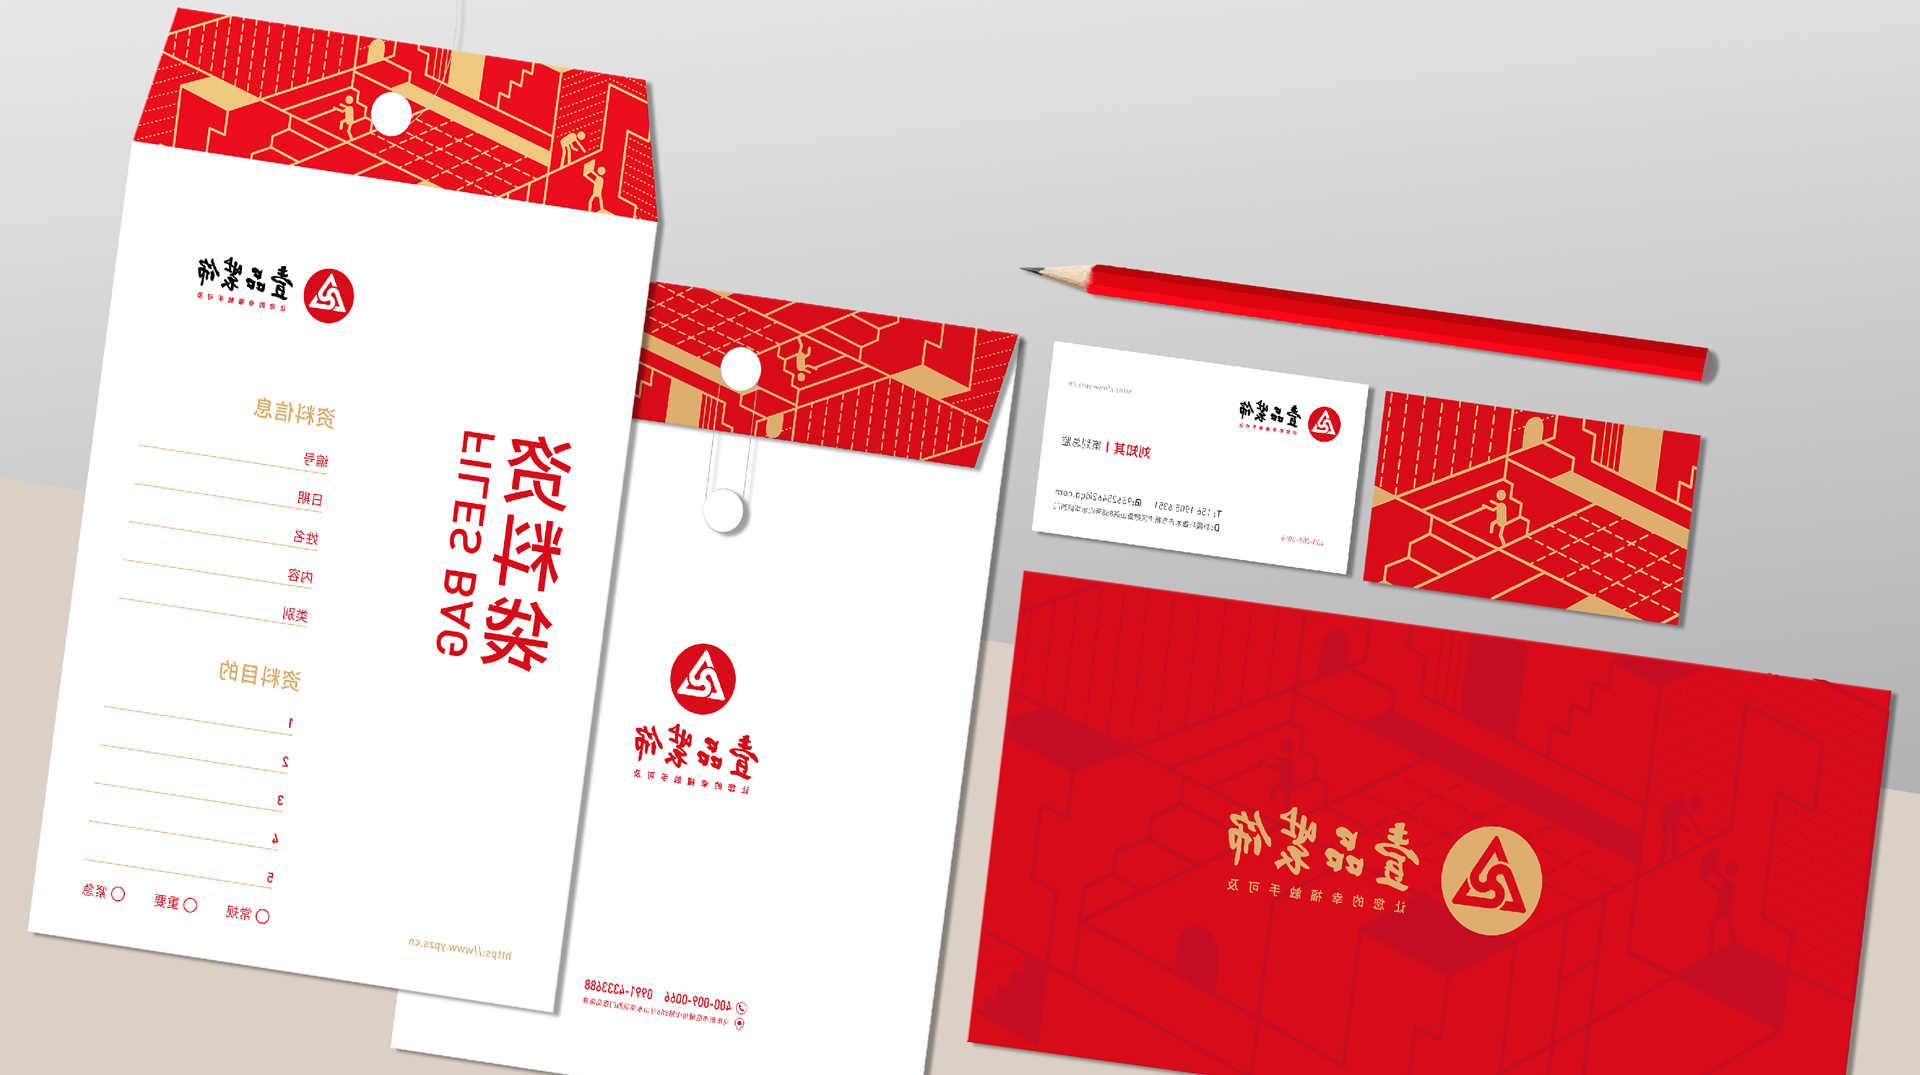 leyu-乐鱼全站app下载(中国)app store
案例-壹品装饰 | 大企业品牌形象升级的“破(图15)